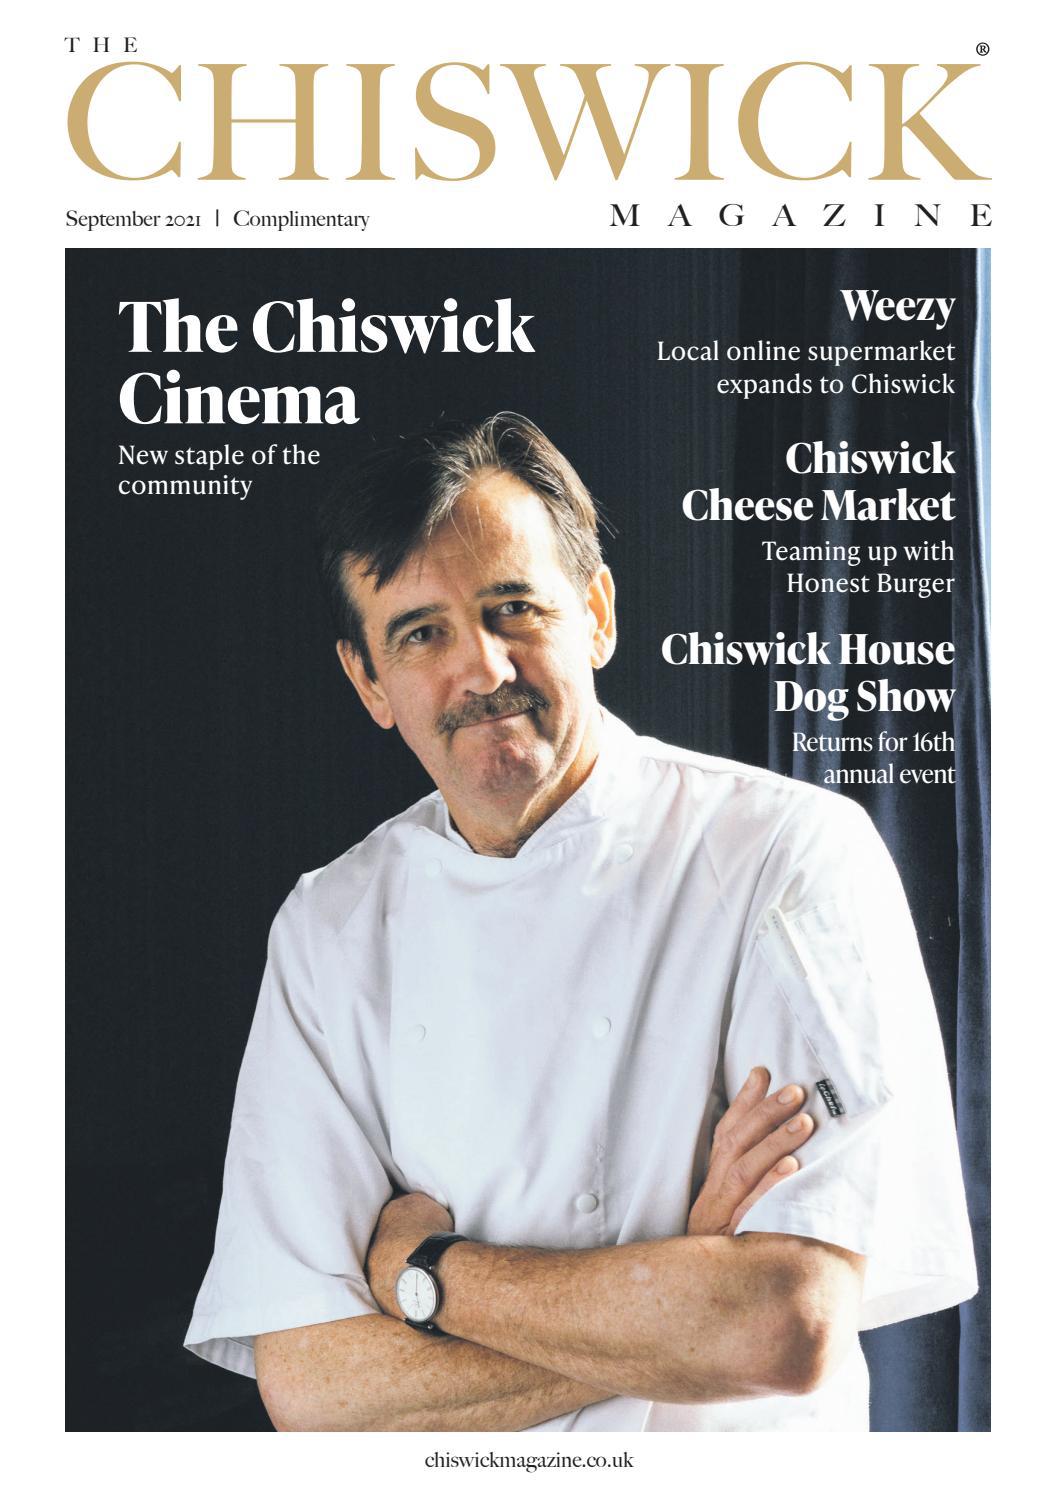 The Chiswick Magazine September 2021